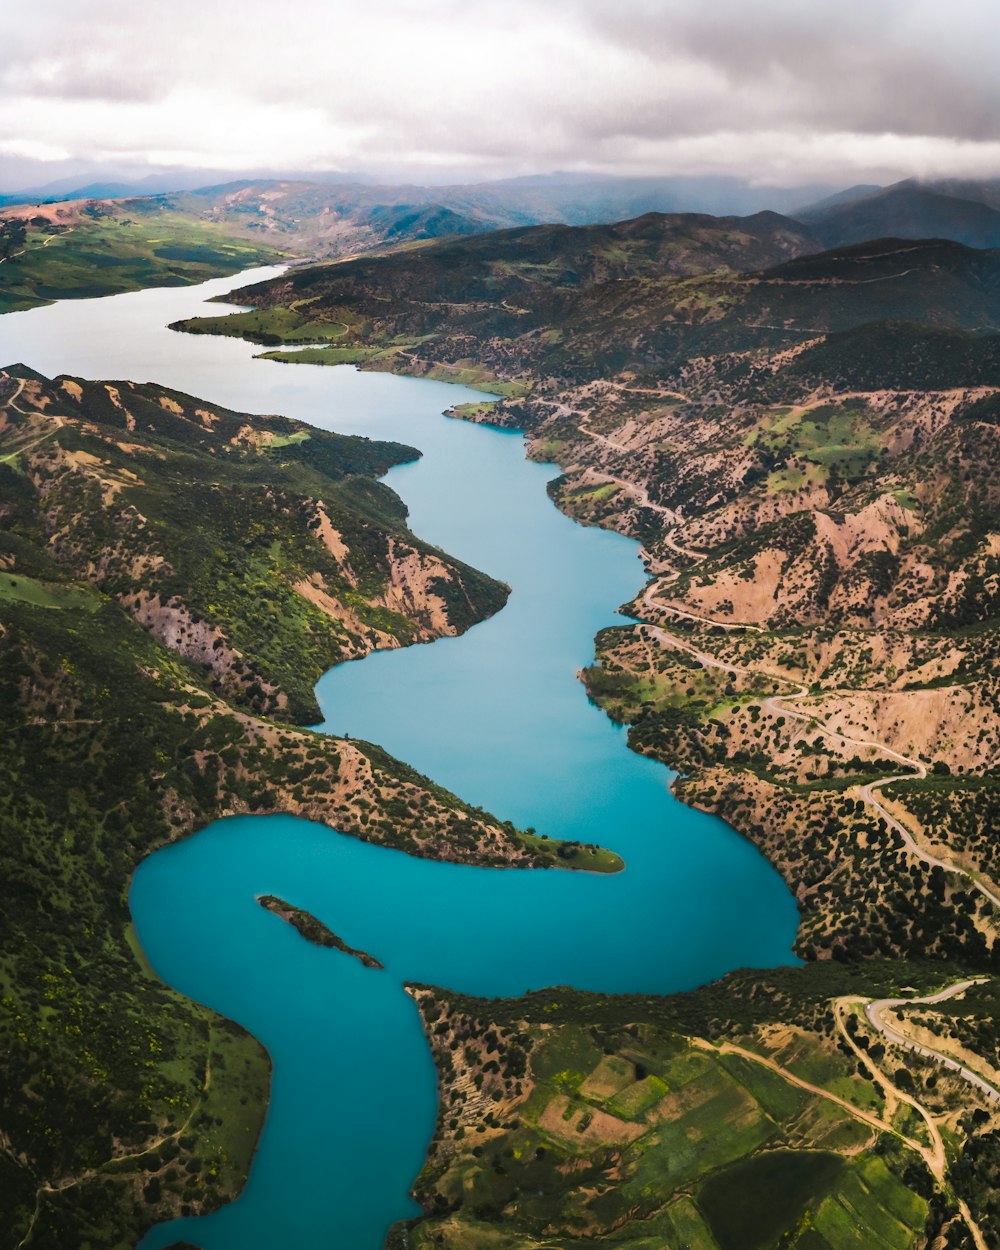 lake between green hills in aerial view